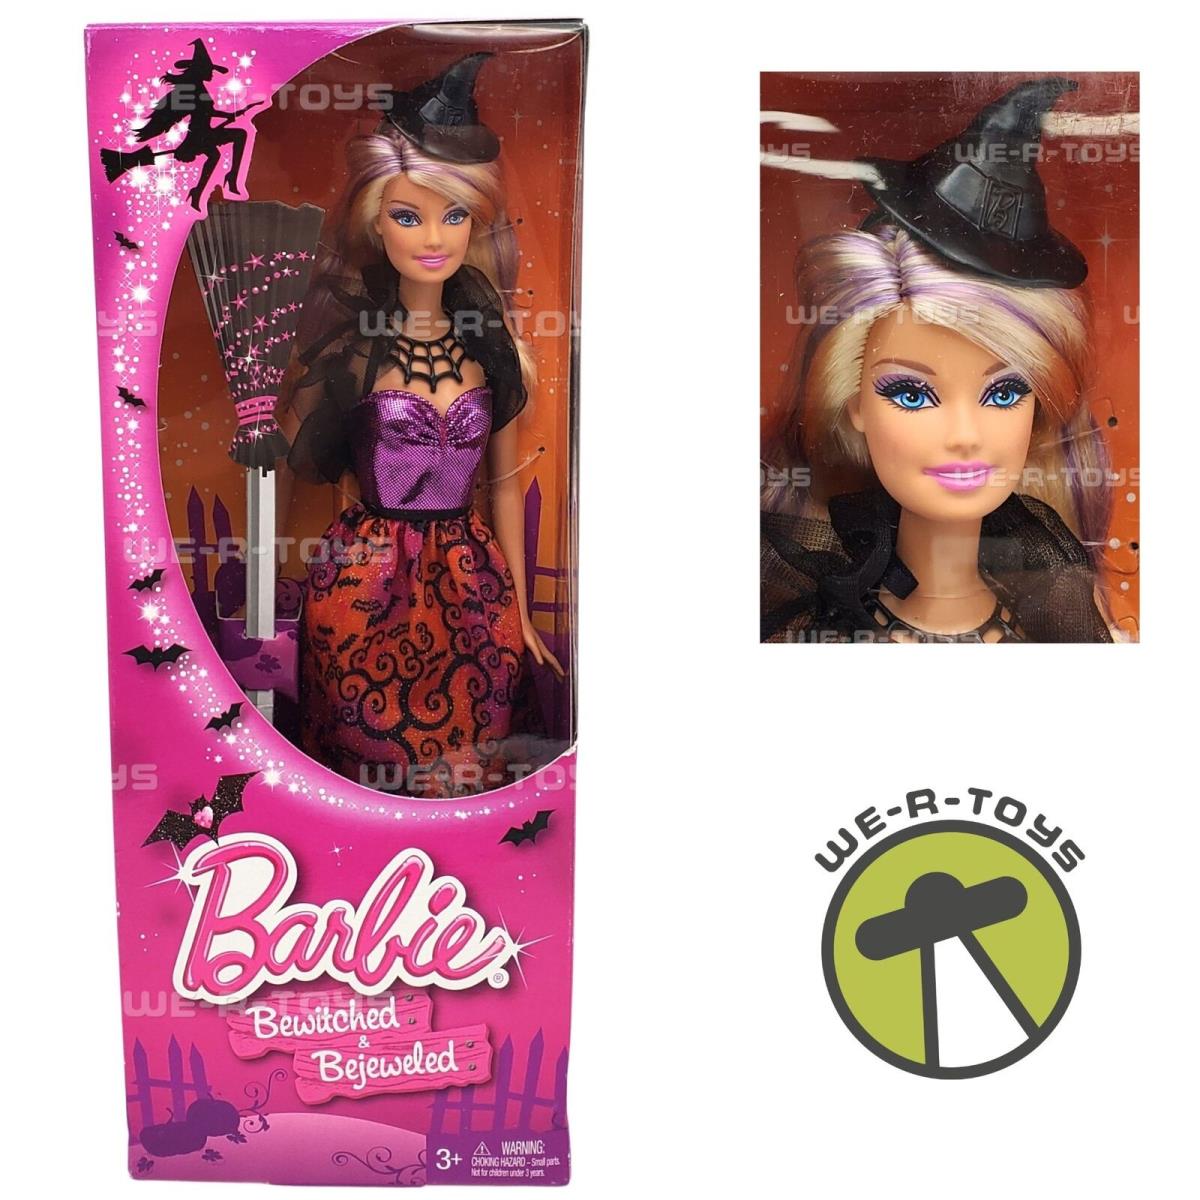 Barbie Bewitched Bejeweled Doll 2013 Mattel BBV49 Nrfb